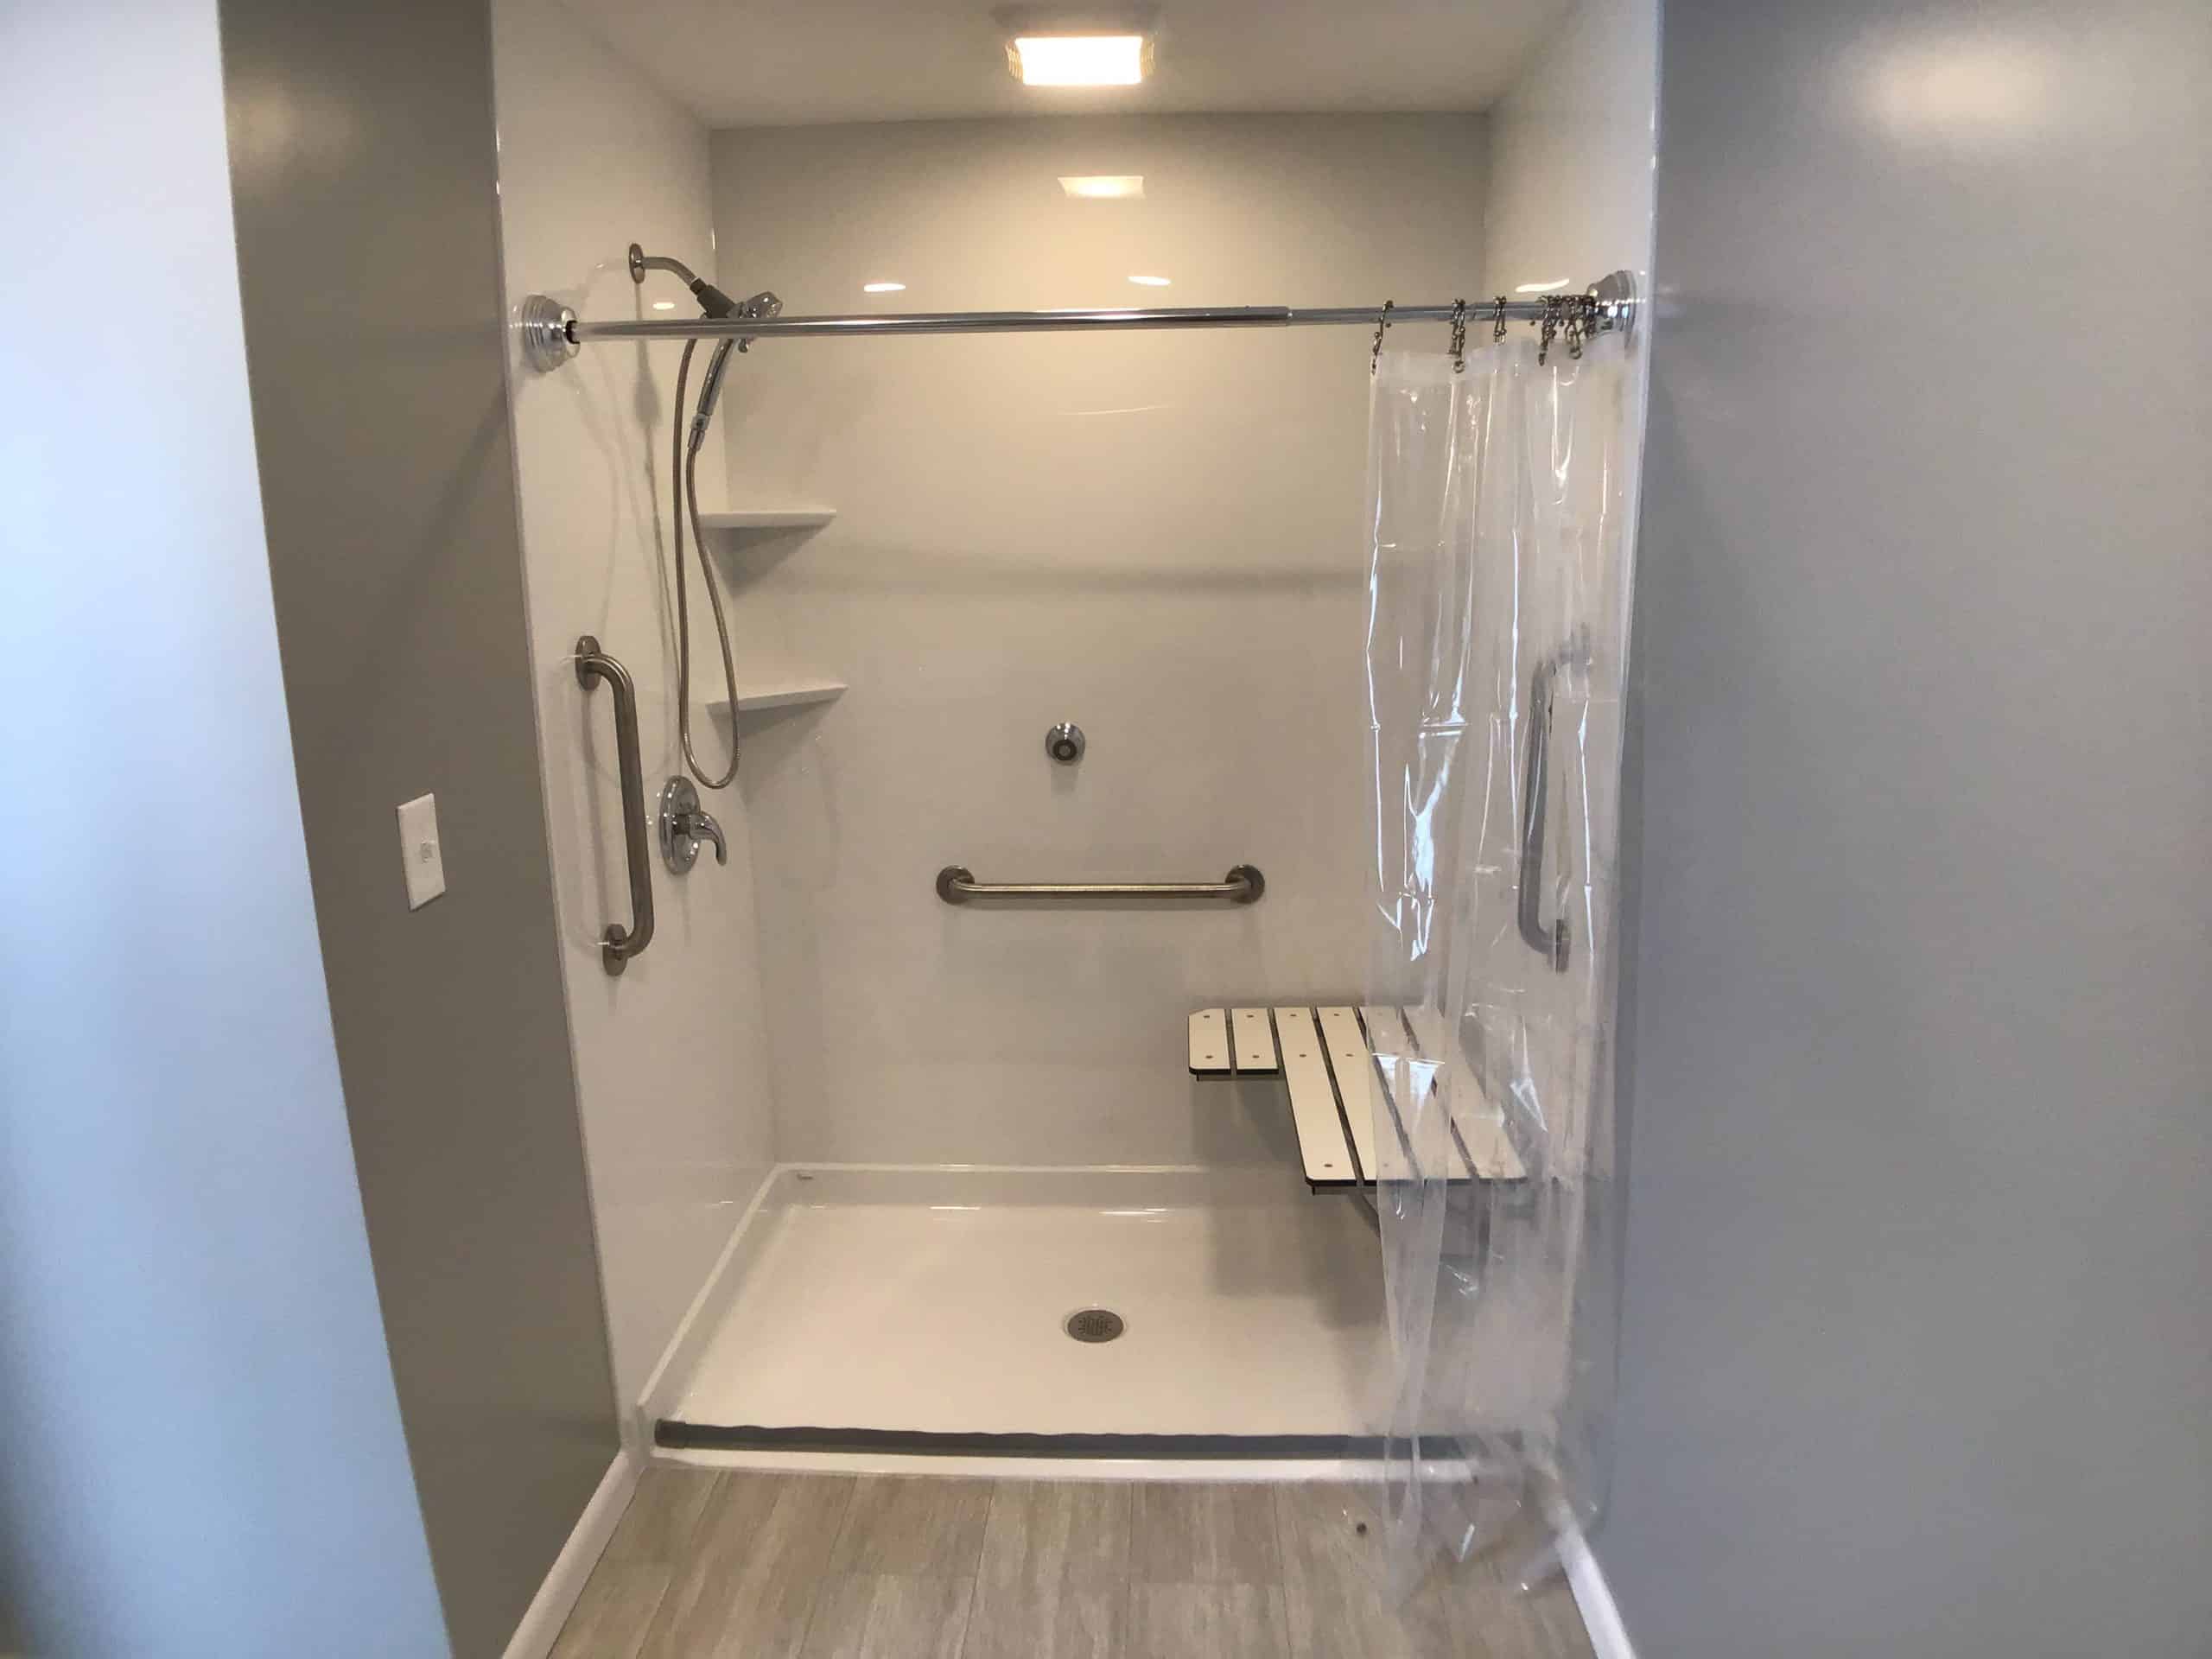 https://bathrenew.com/wp-content/uploads/2022/04/Handicap-Accessible-Bathroom-Walk-In-Shower-Barrier-Free-scaled.jpg